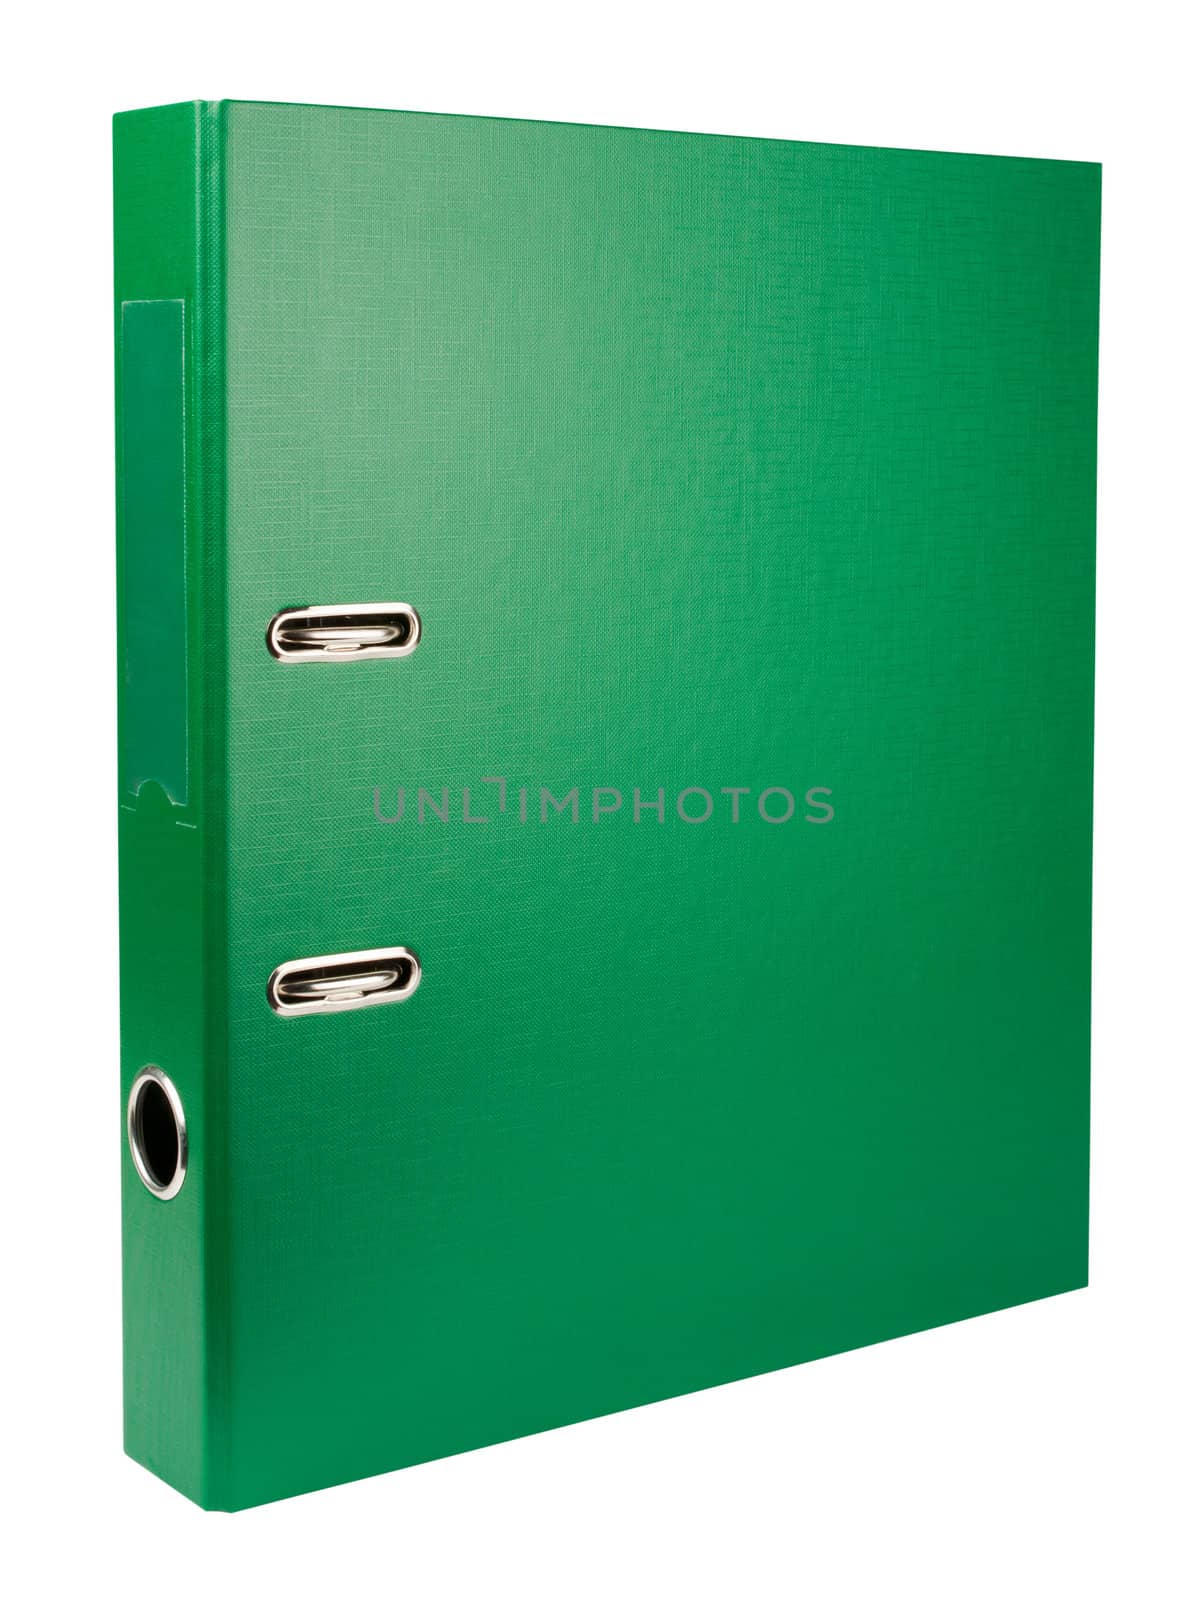 Green folder isolated on white background